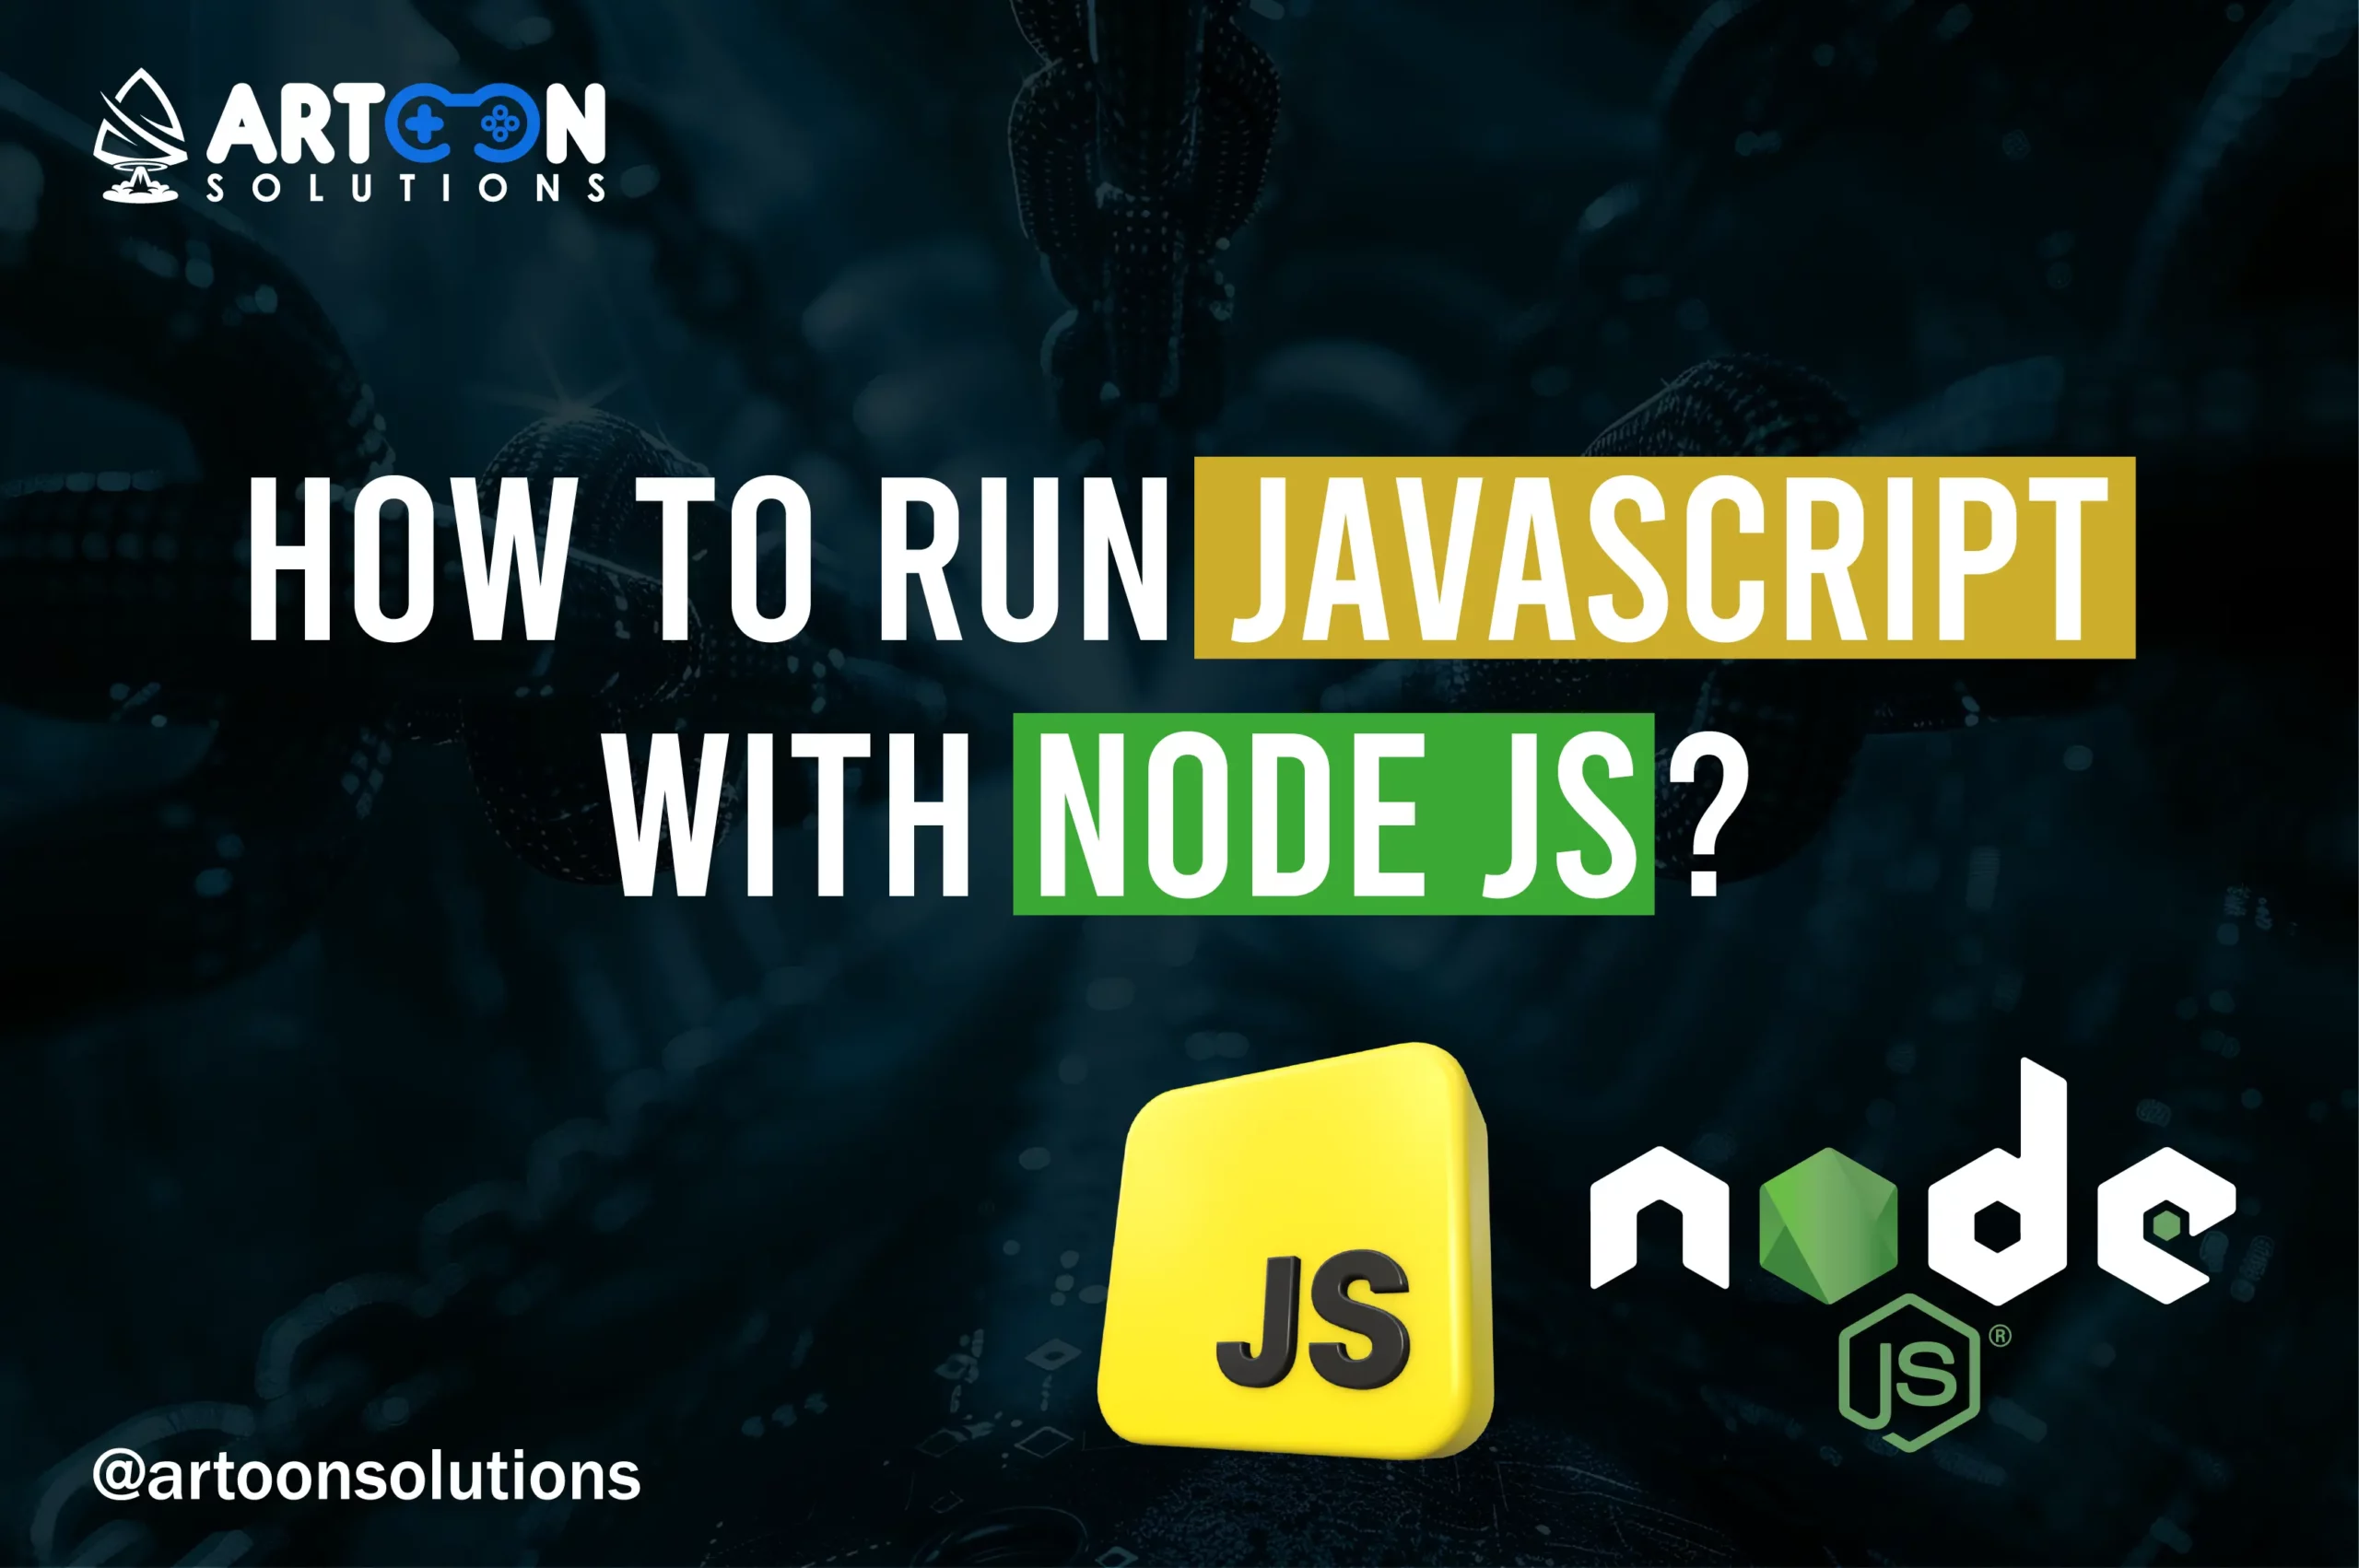 Run JavaScript with Node js